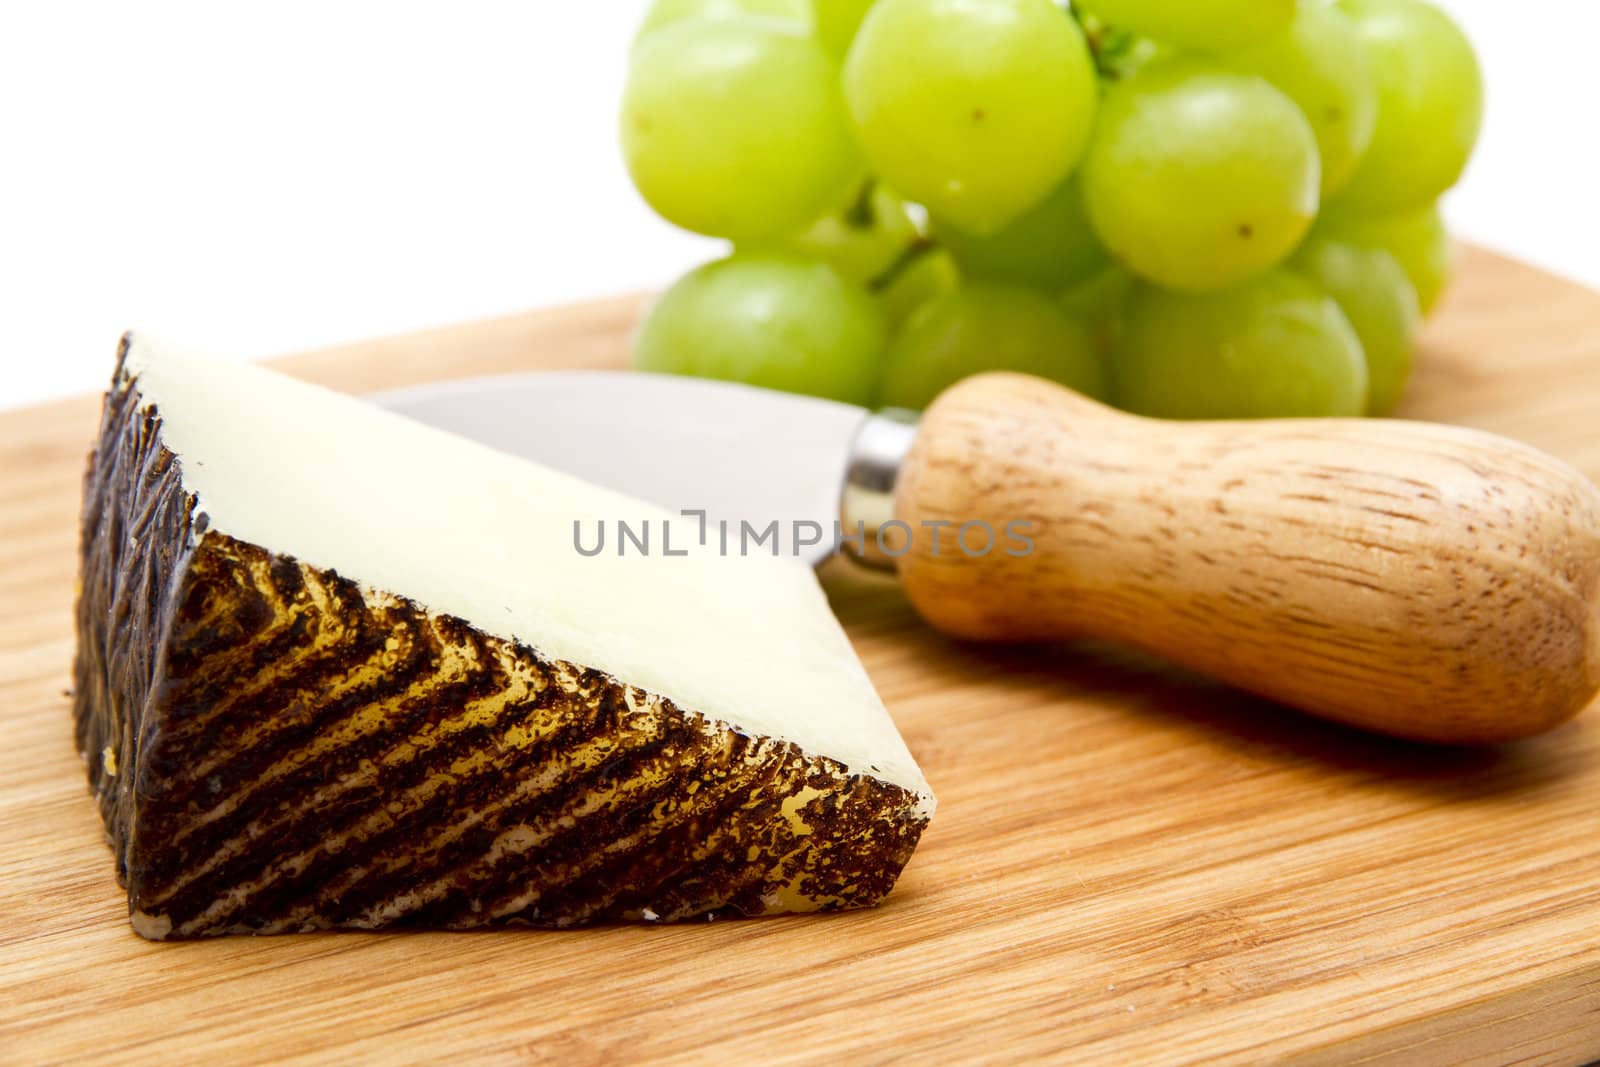 Manchego cheese ang grapes on chopping board by caldix